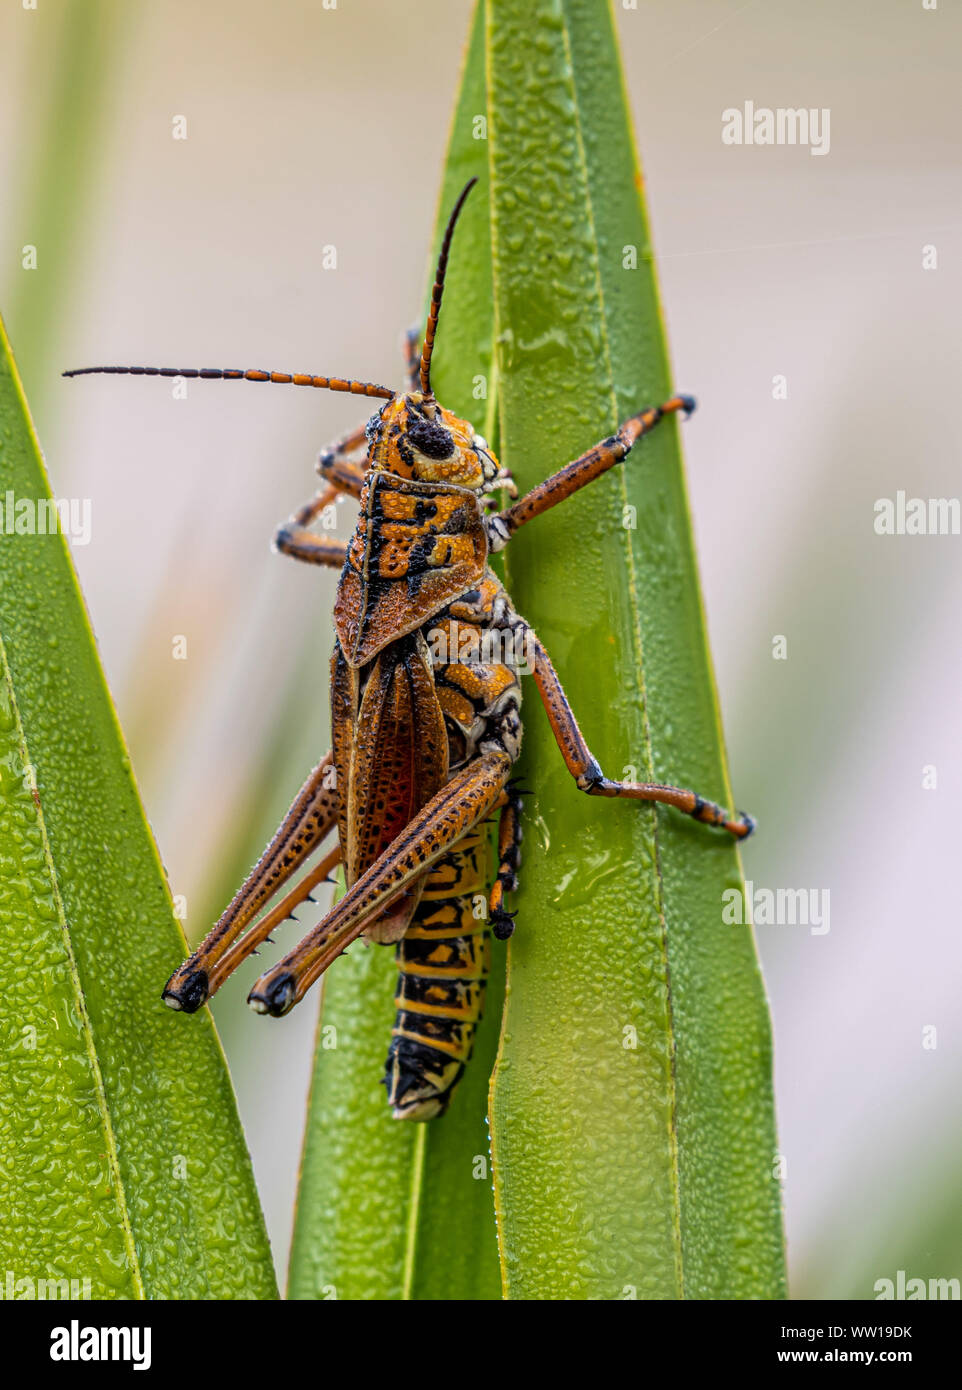 Orange lubber grasshopper on plant blades Stock Photo